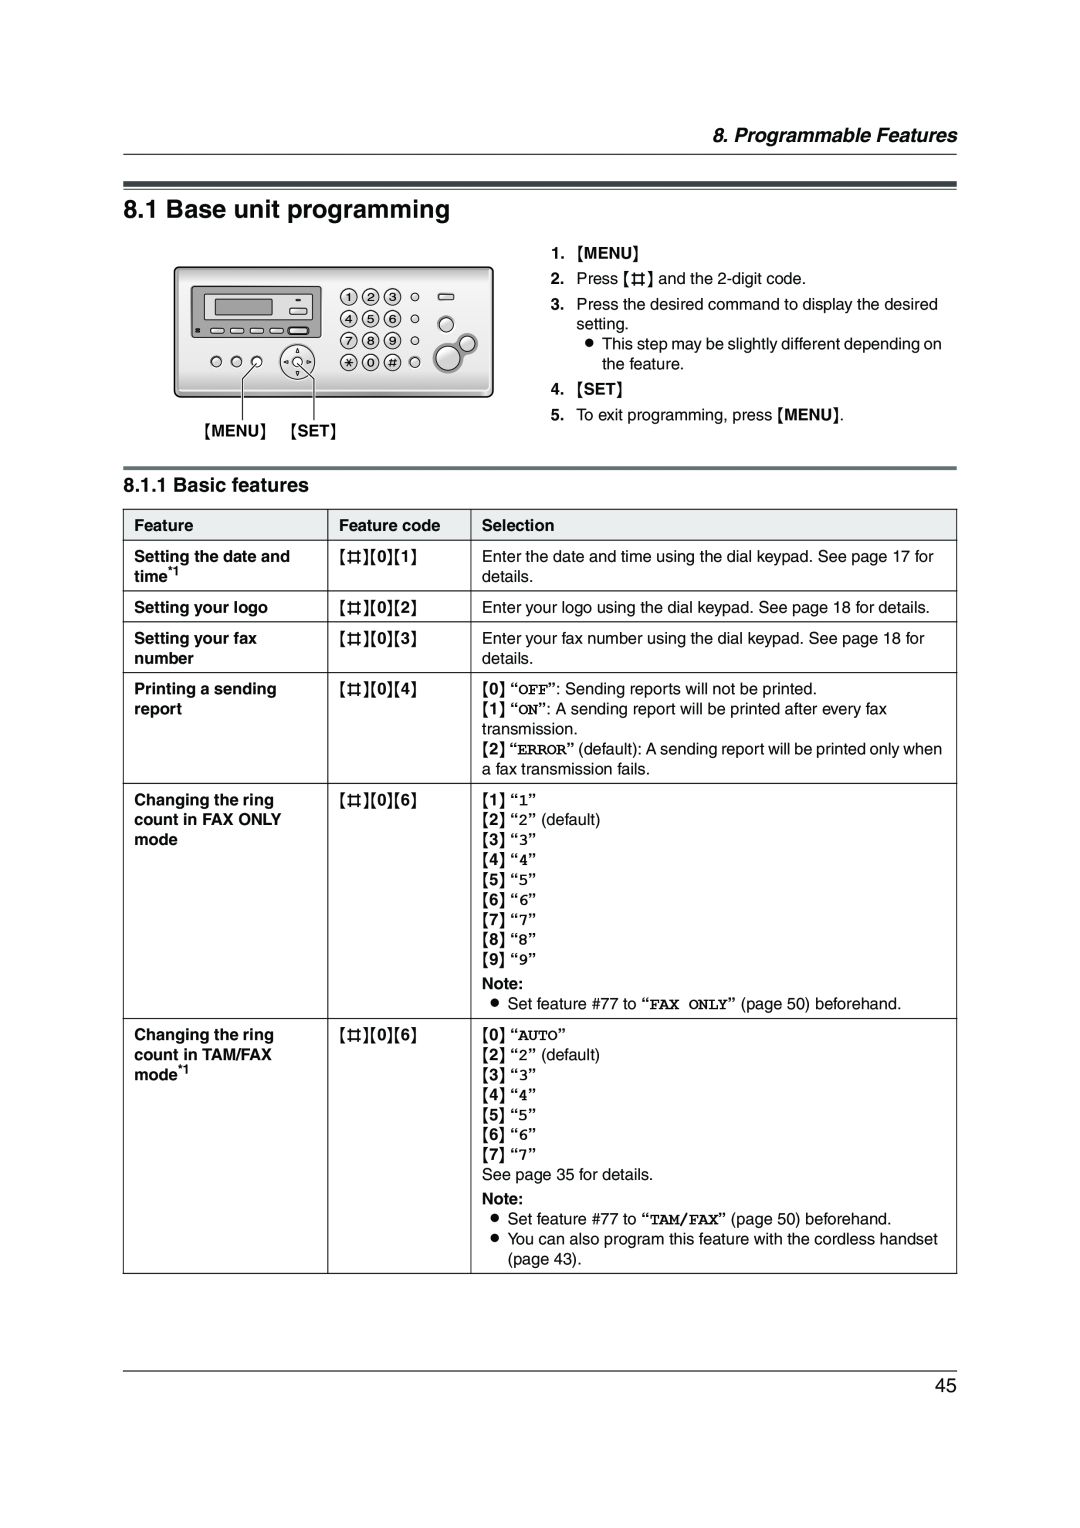 Panasonic KX-FC228HK Base unit programming, Programmable Features, Basic features, 1 “1”, 3 “3”, 4 “4”, 5 “5”, 6 “6” 